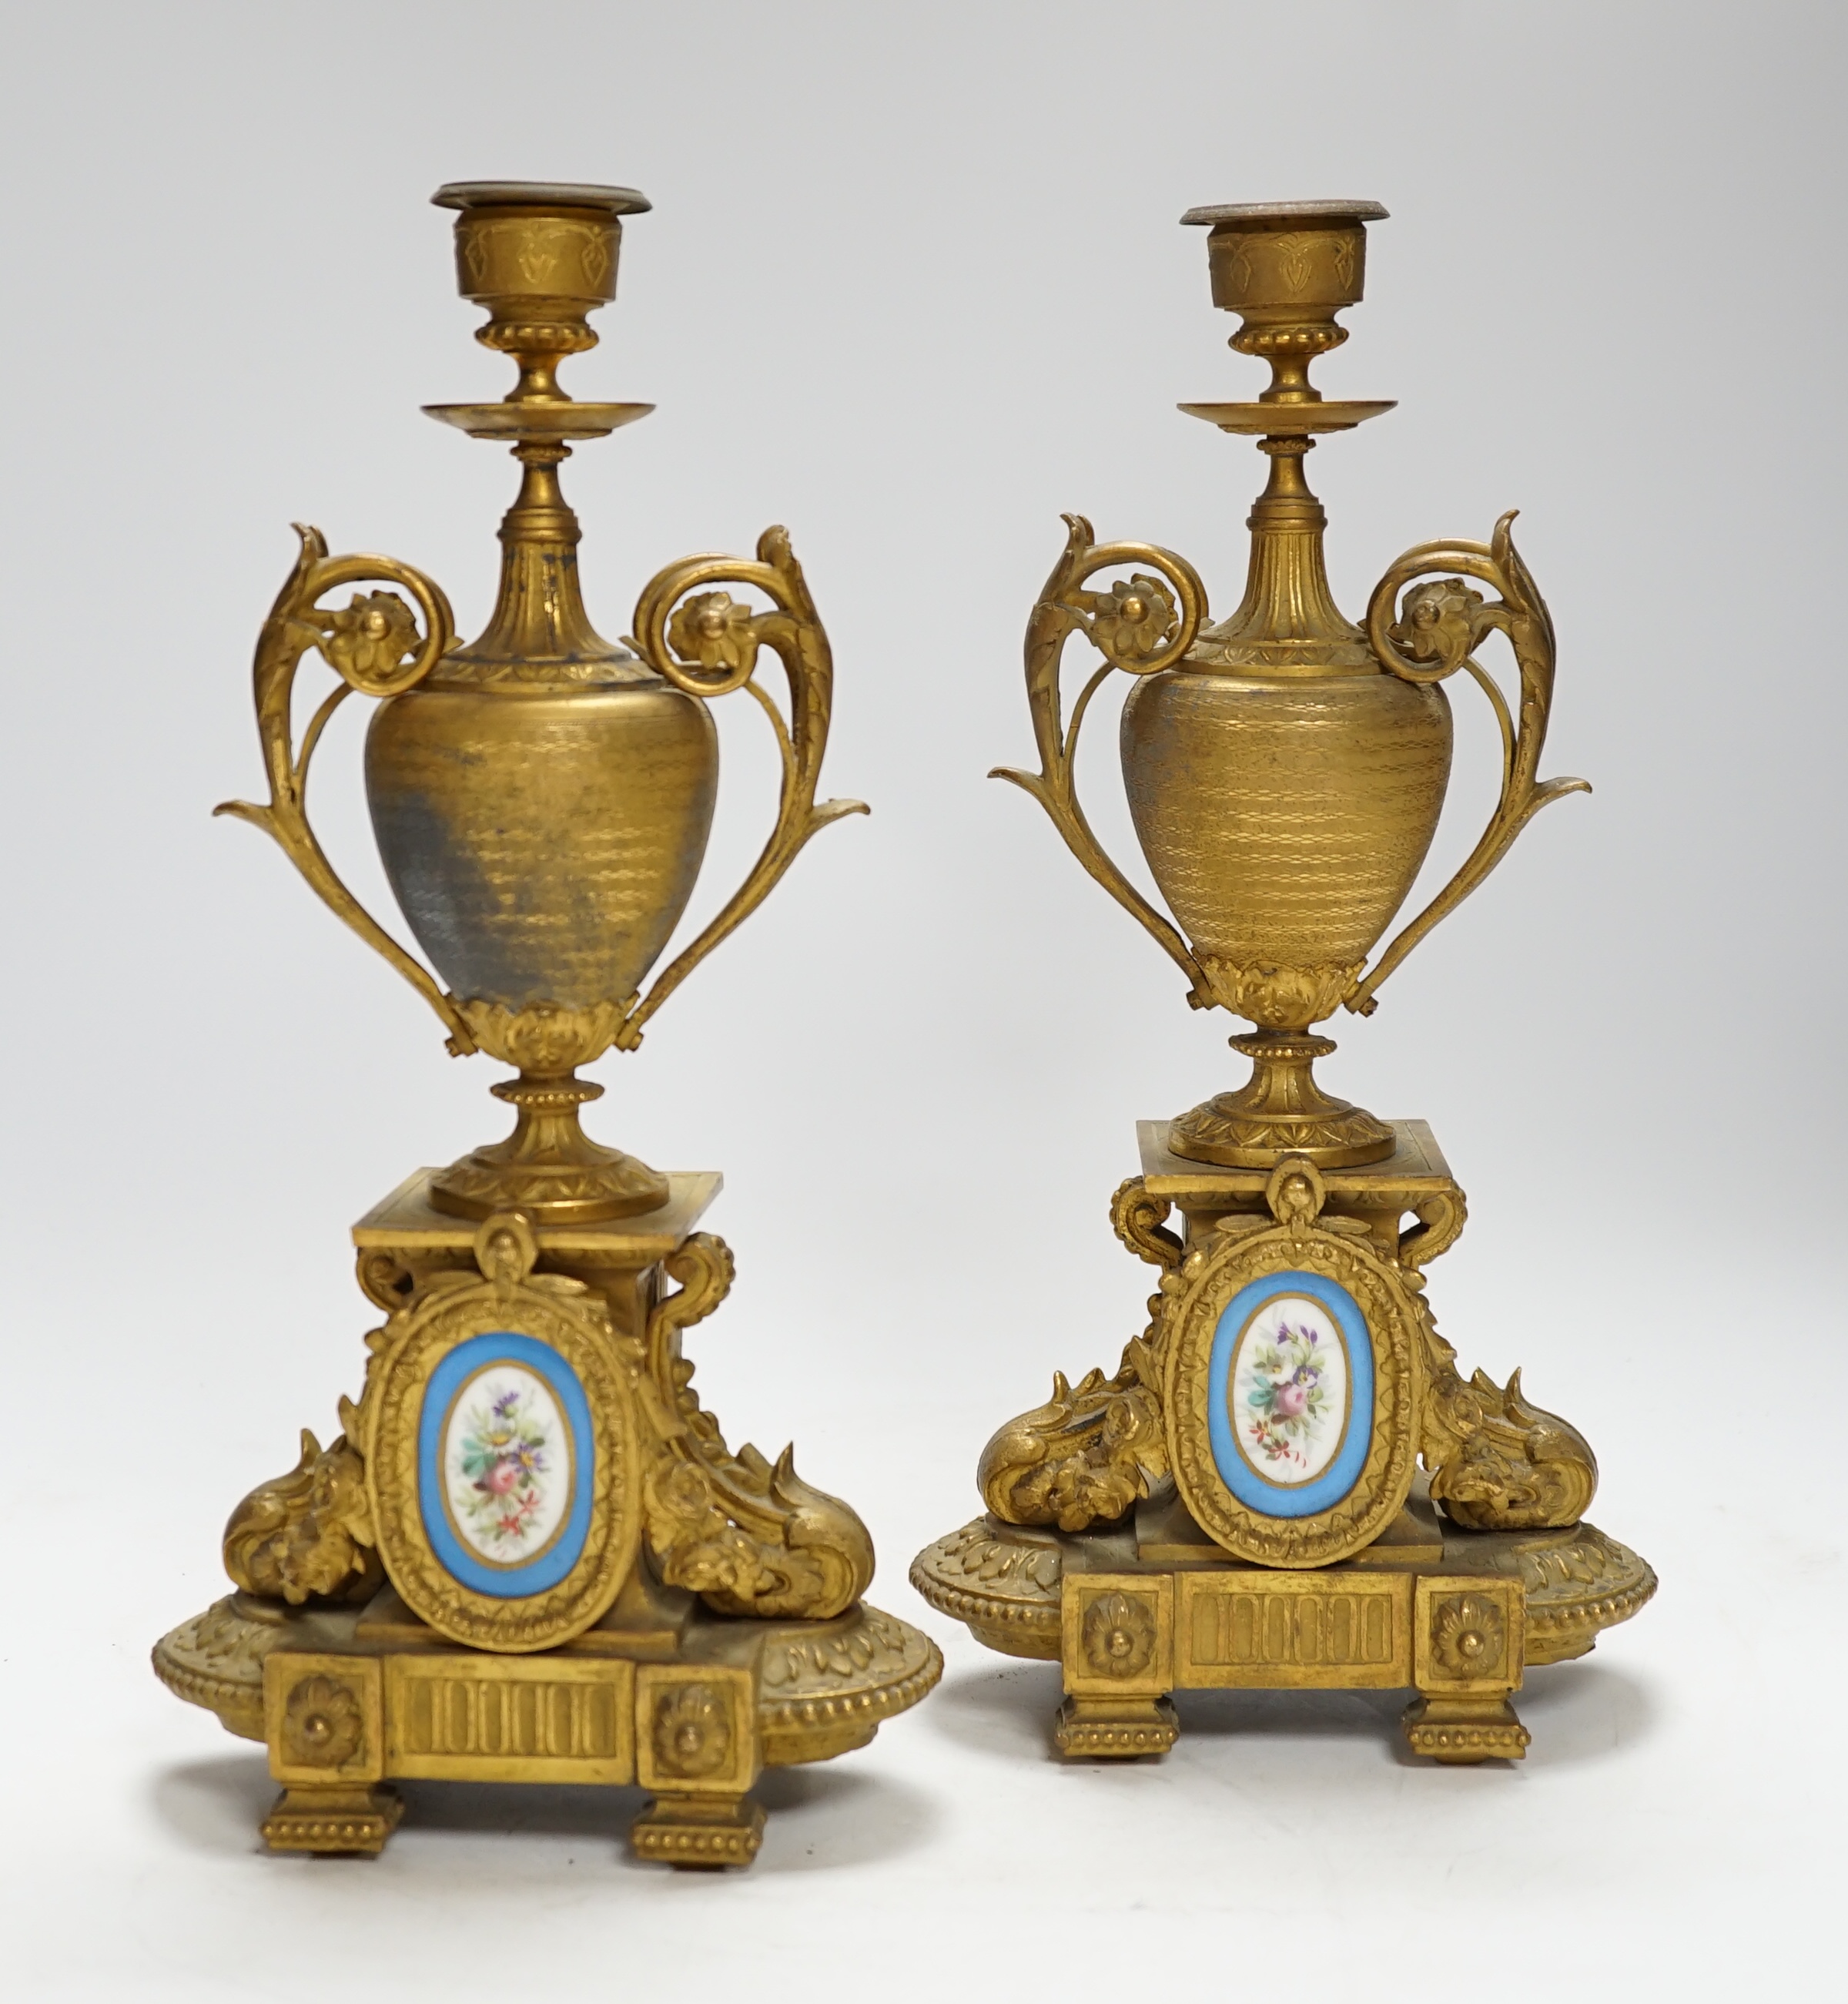 A pair of 19th century French ornamental ormolu candlesticks, possibly clock garnitures, 32.5cm high